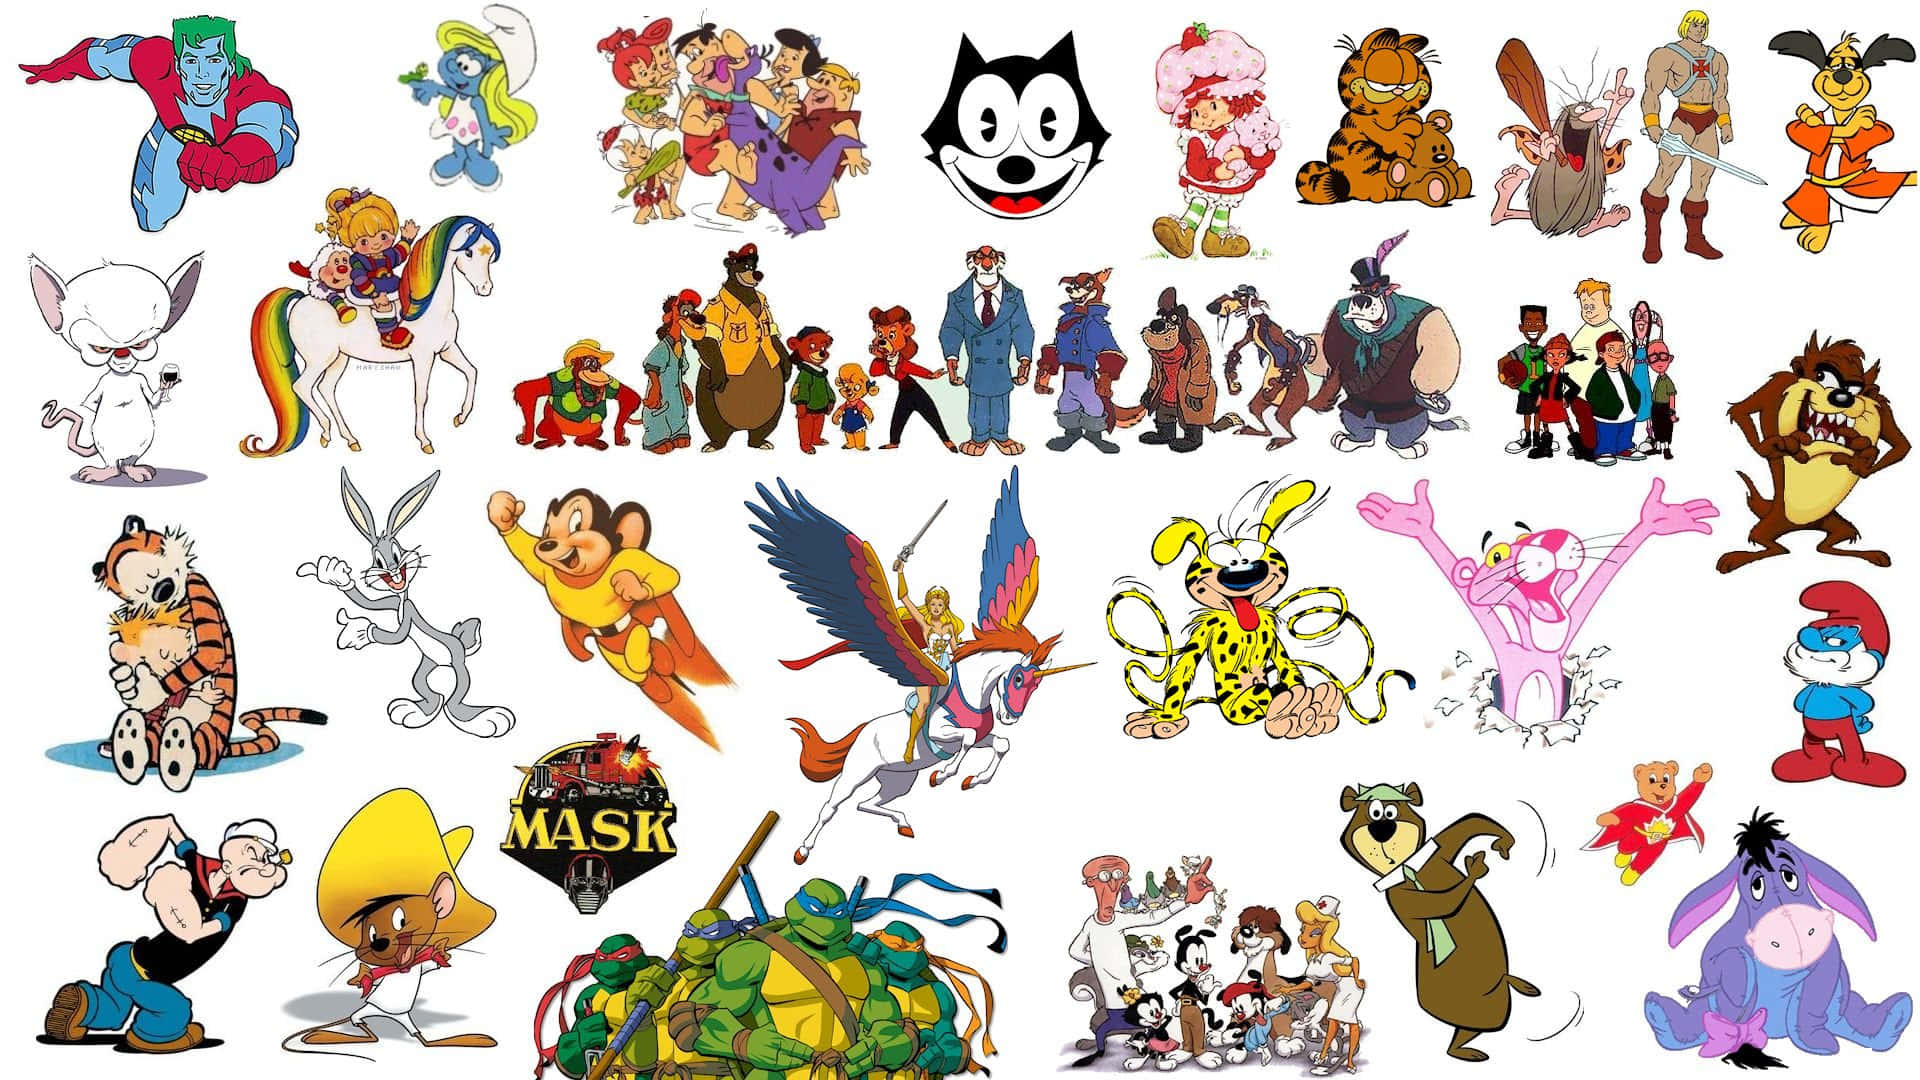 Free Cartoon Collage Wallpaper Downloads, [100+] Cartoon Collage Wallpapers  for FREE 